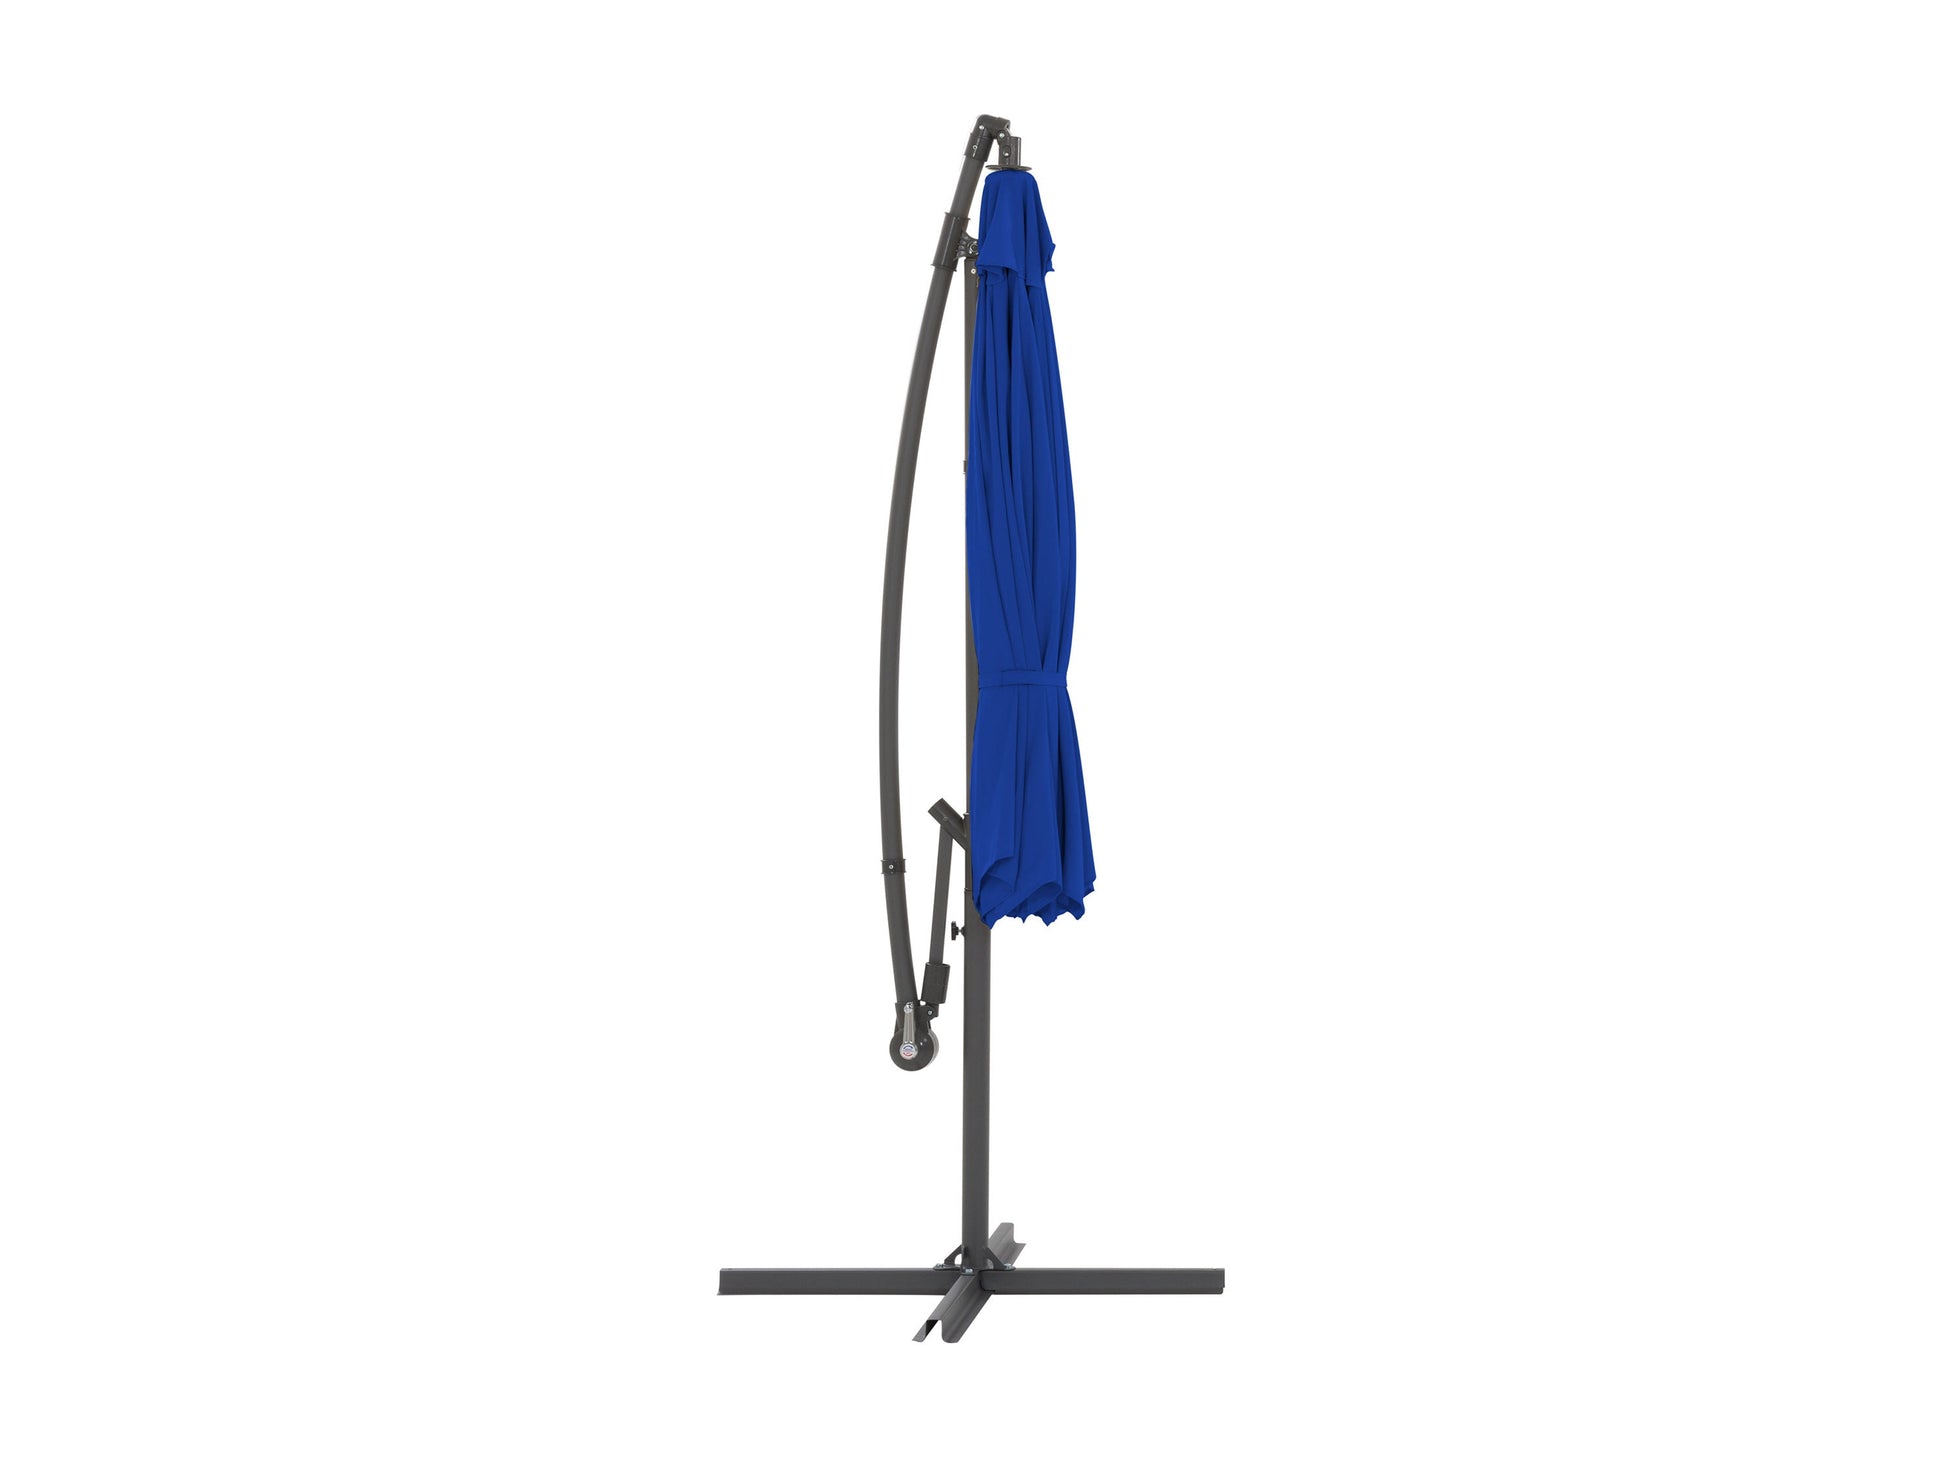 cobalt blue offset patio umbrella with base 400 Series product image CorLiving#color_cobalt-blue